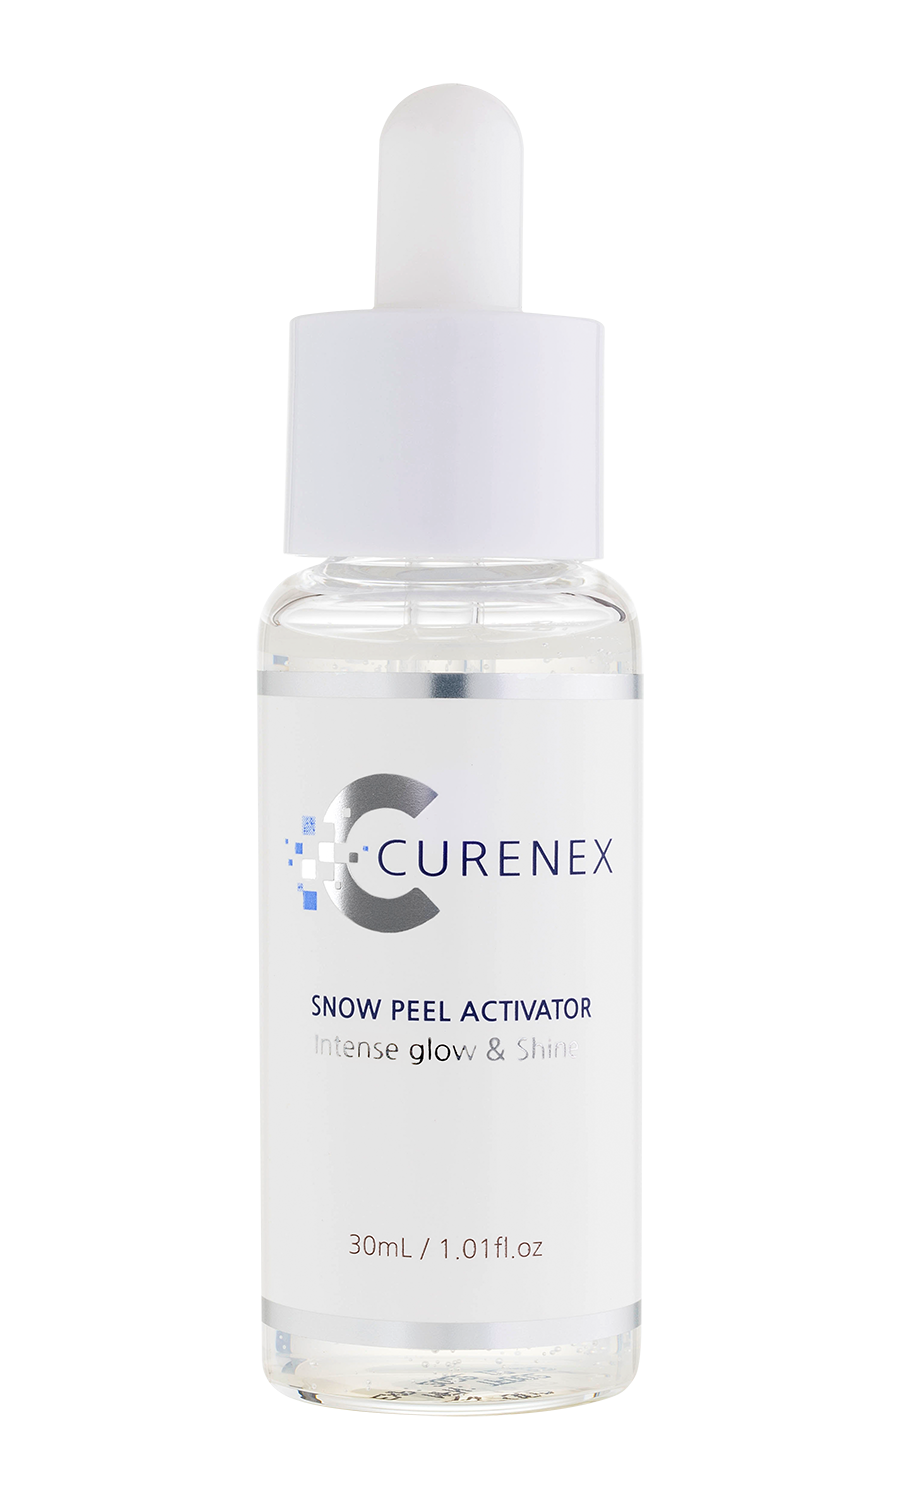 Curenex Snowpeel